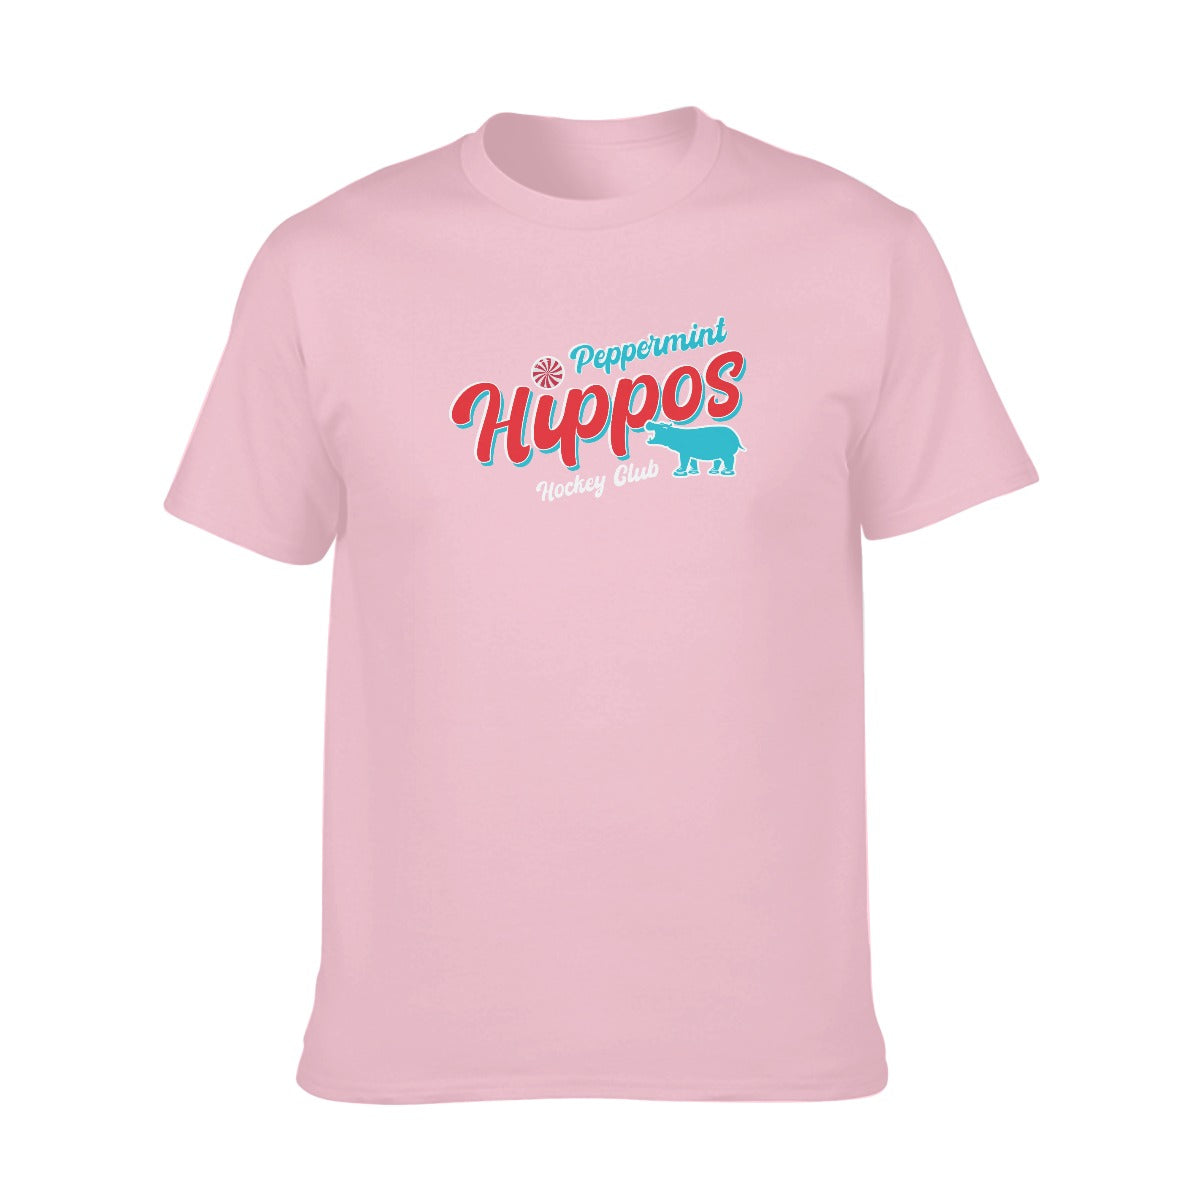 Peppermint Hippos T-shirt Unisex - multiple color options